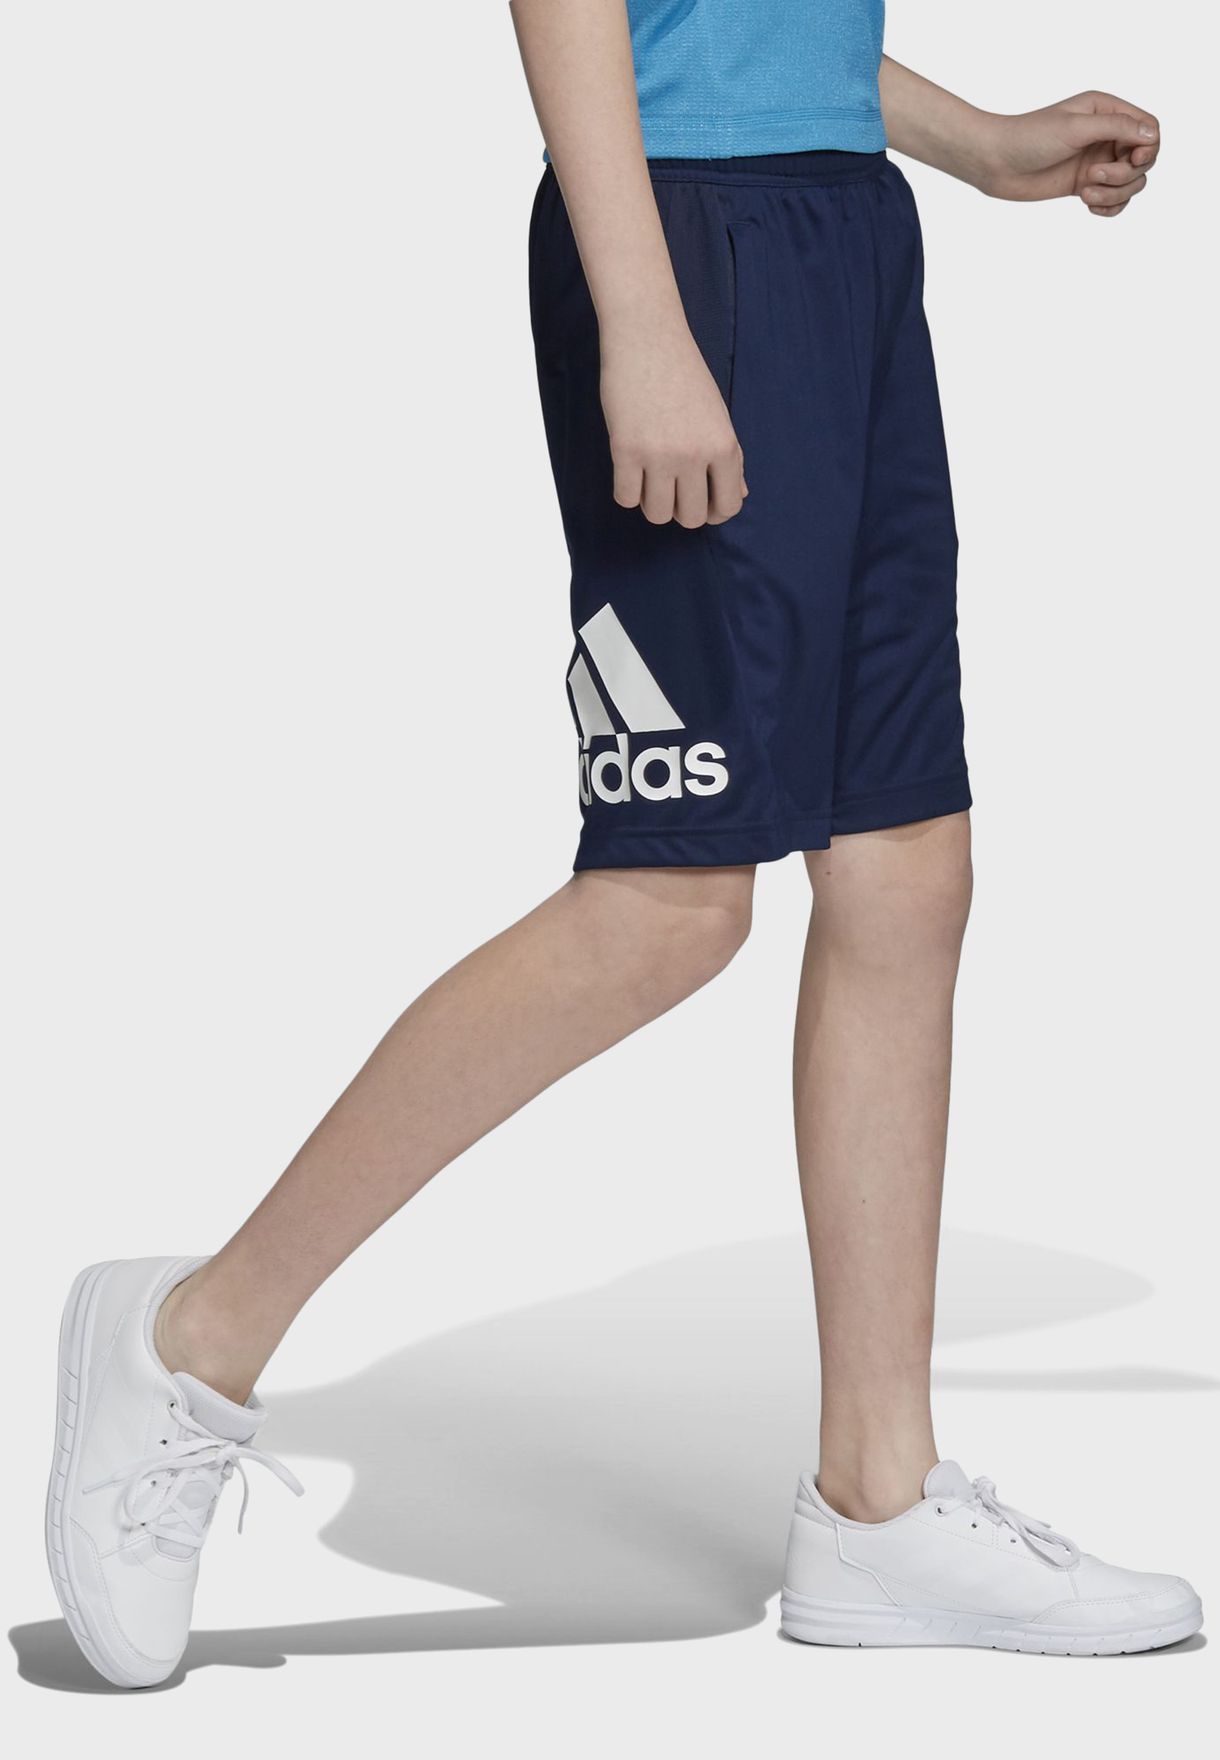 adidas equipment shorts